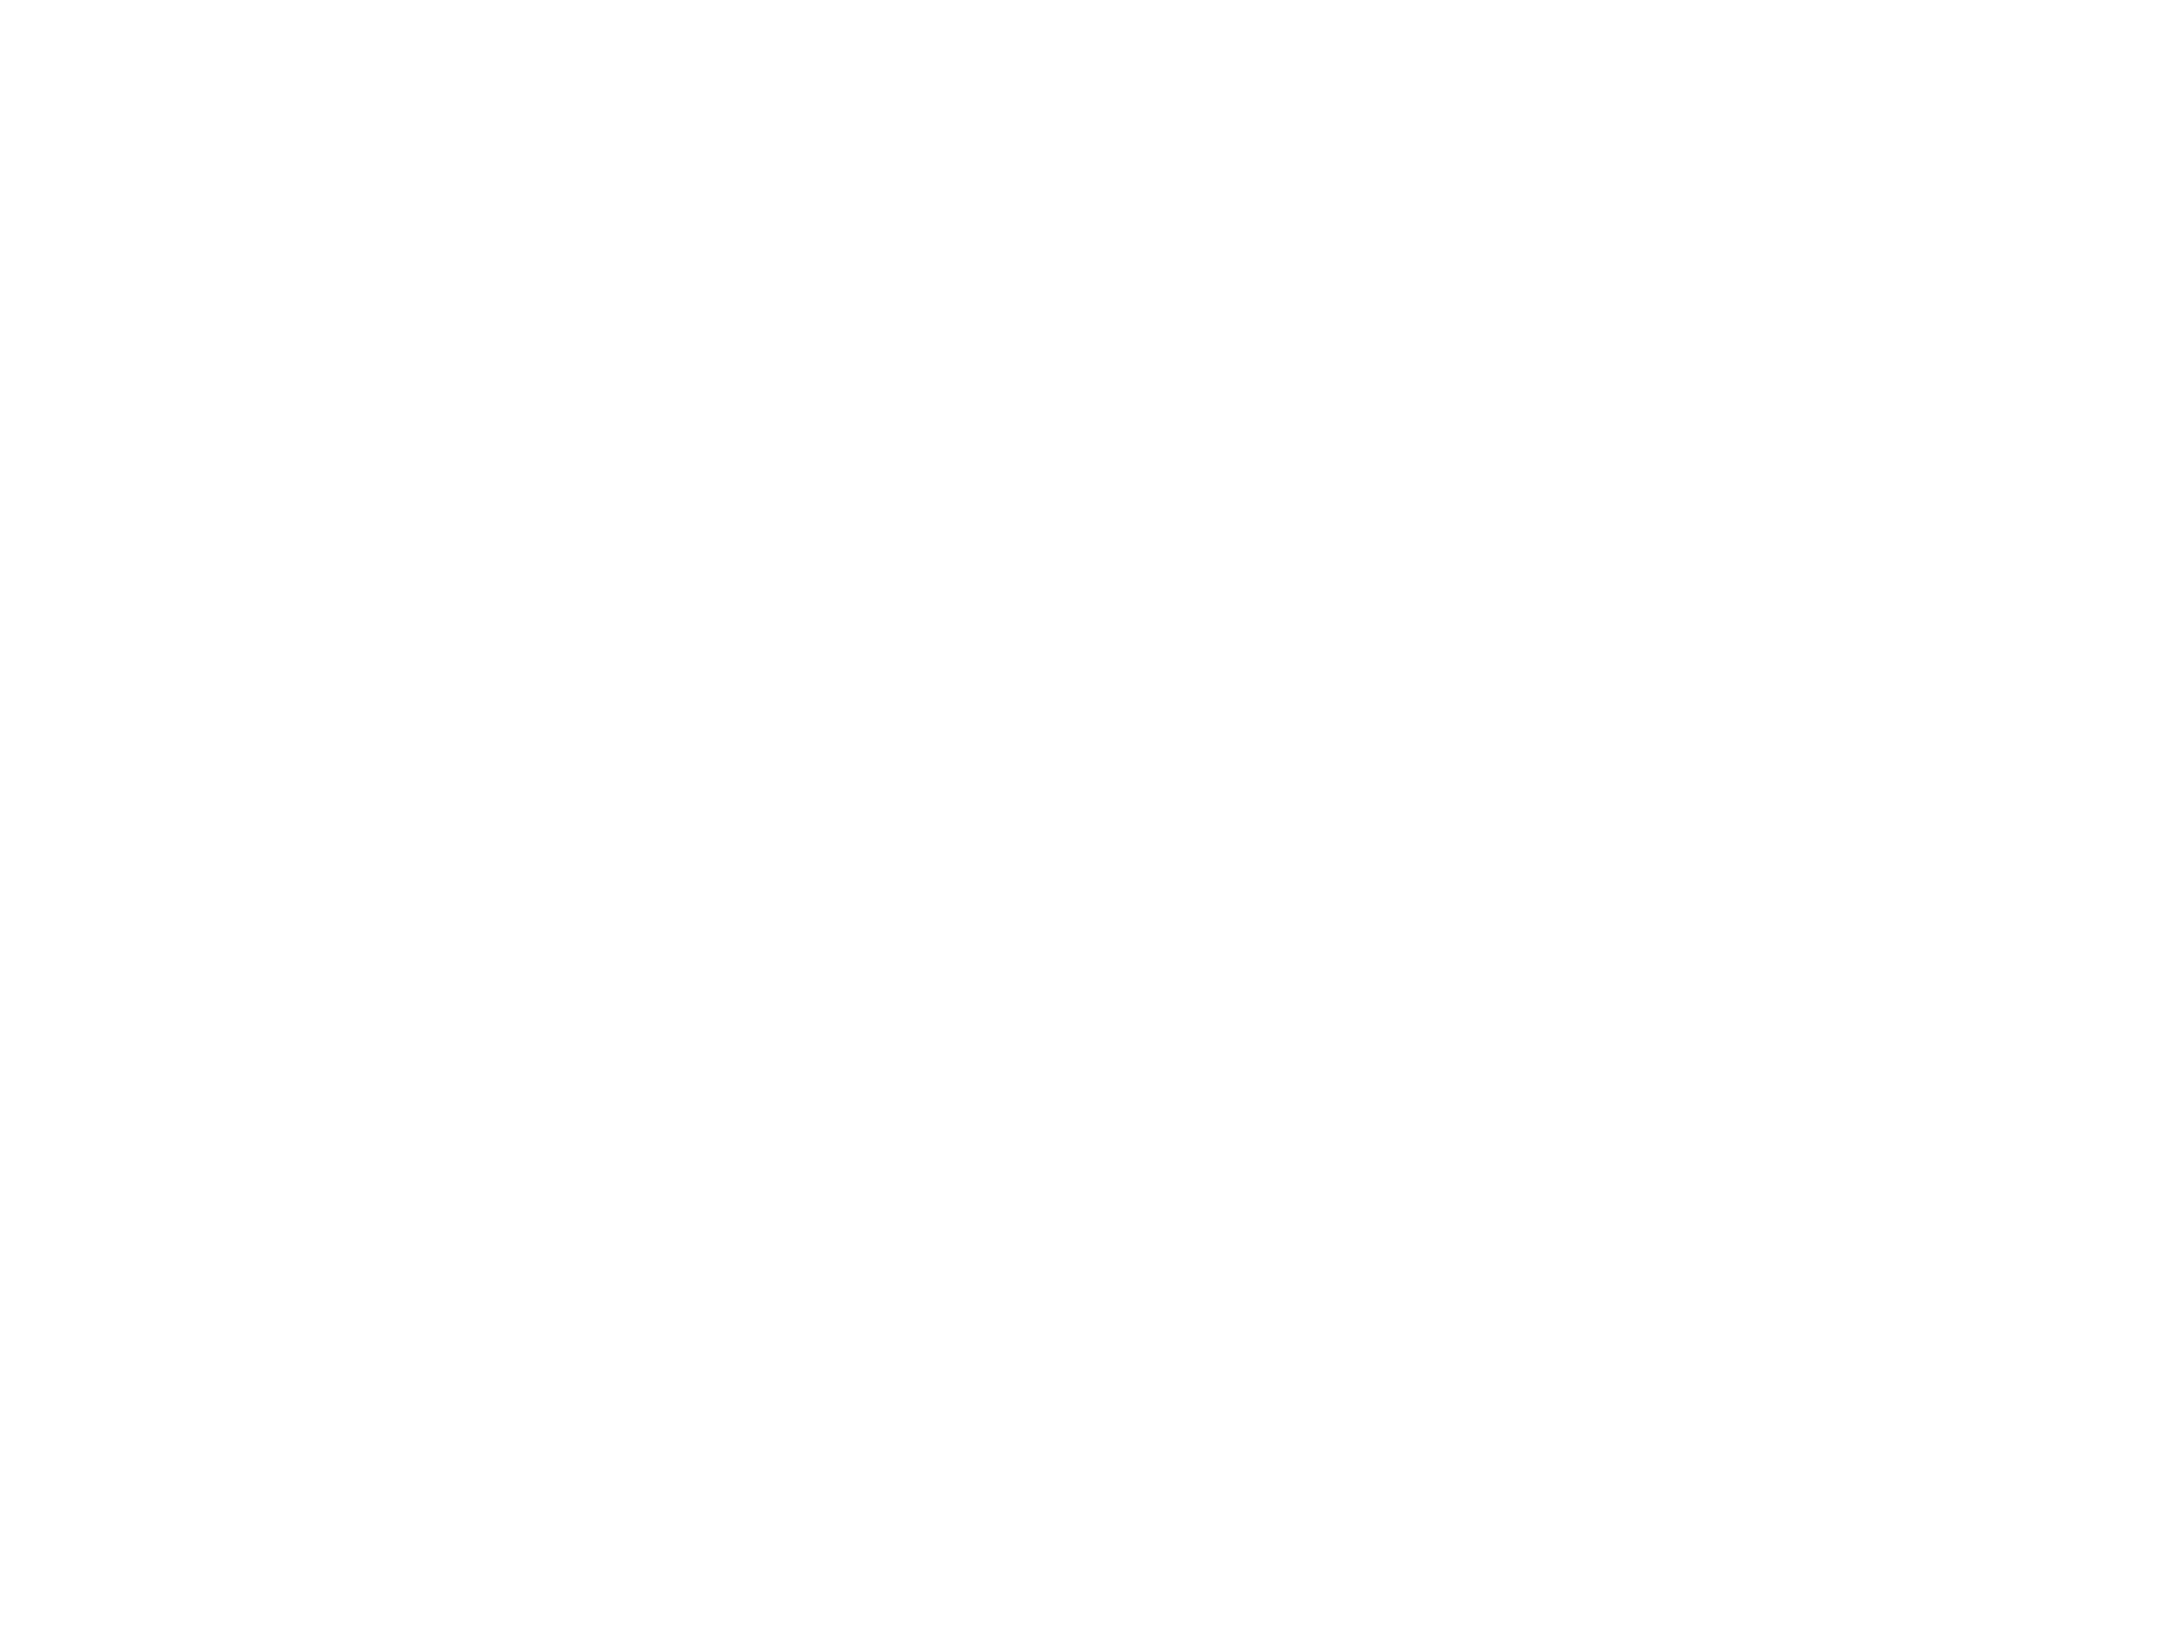 Discipleship - be one make one